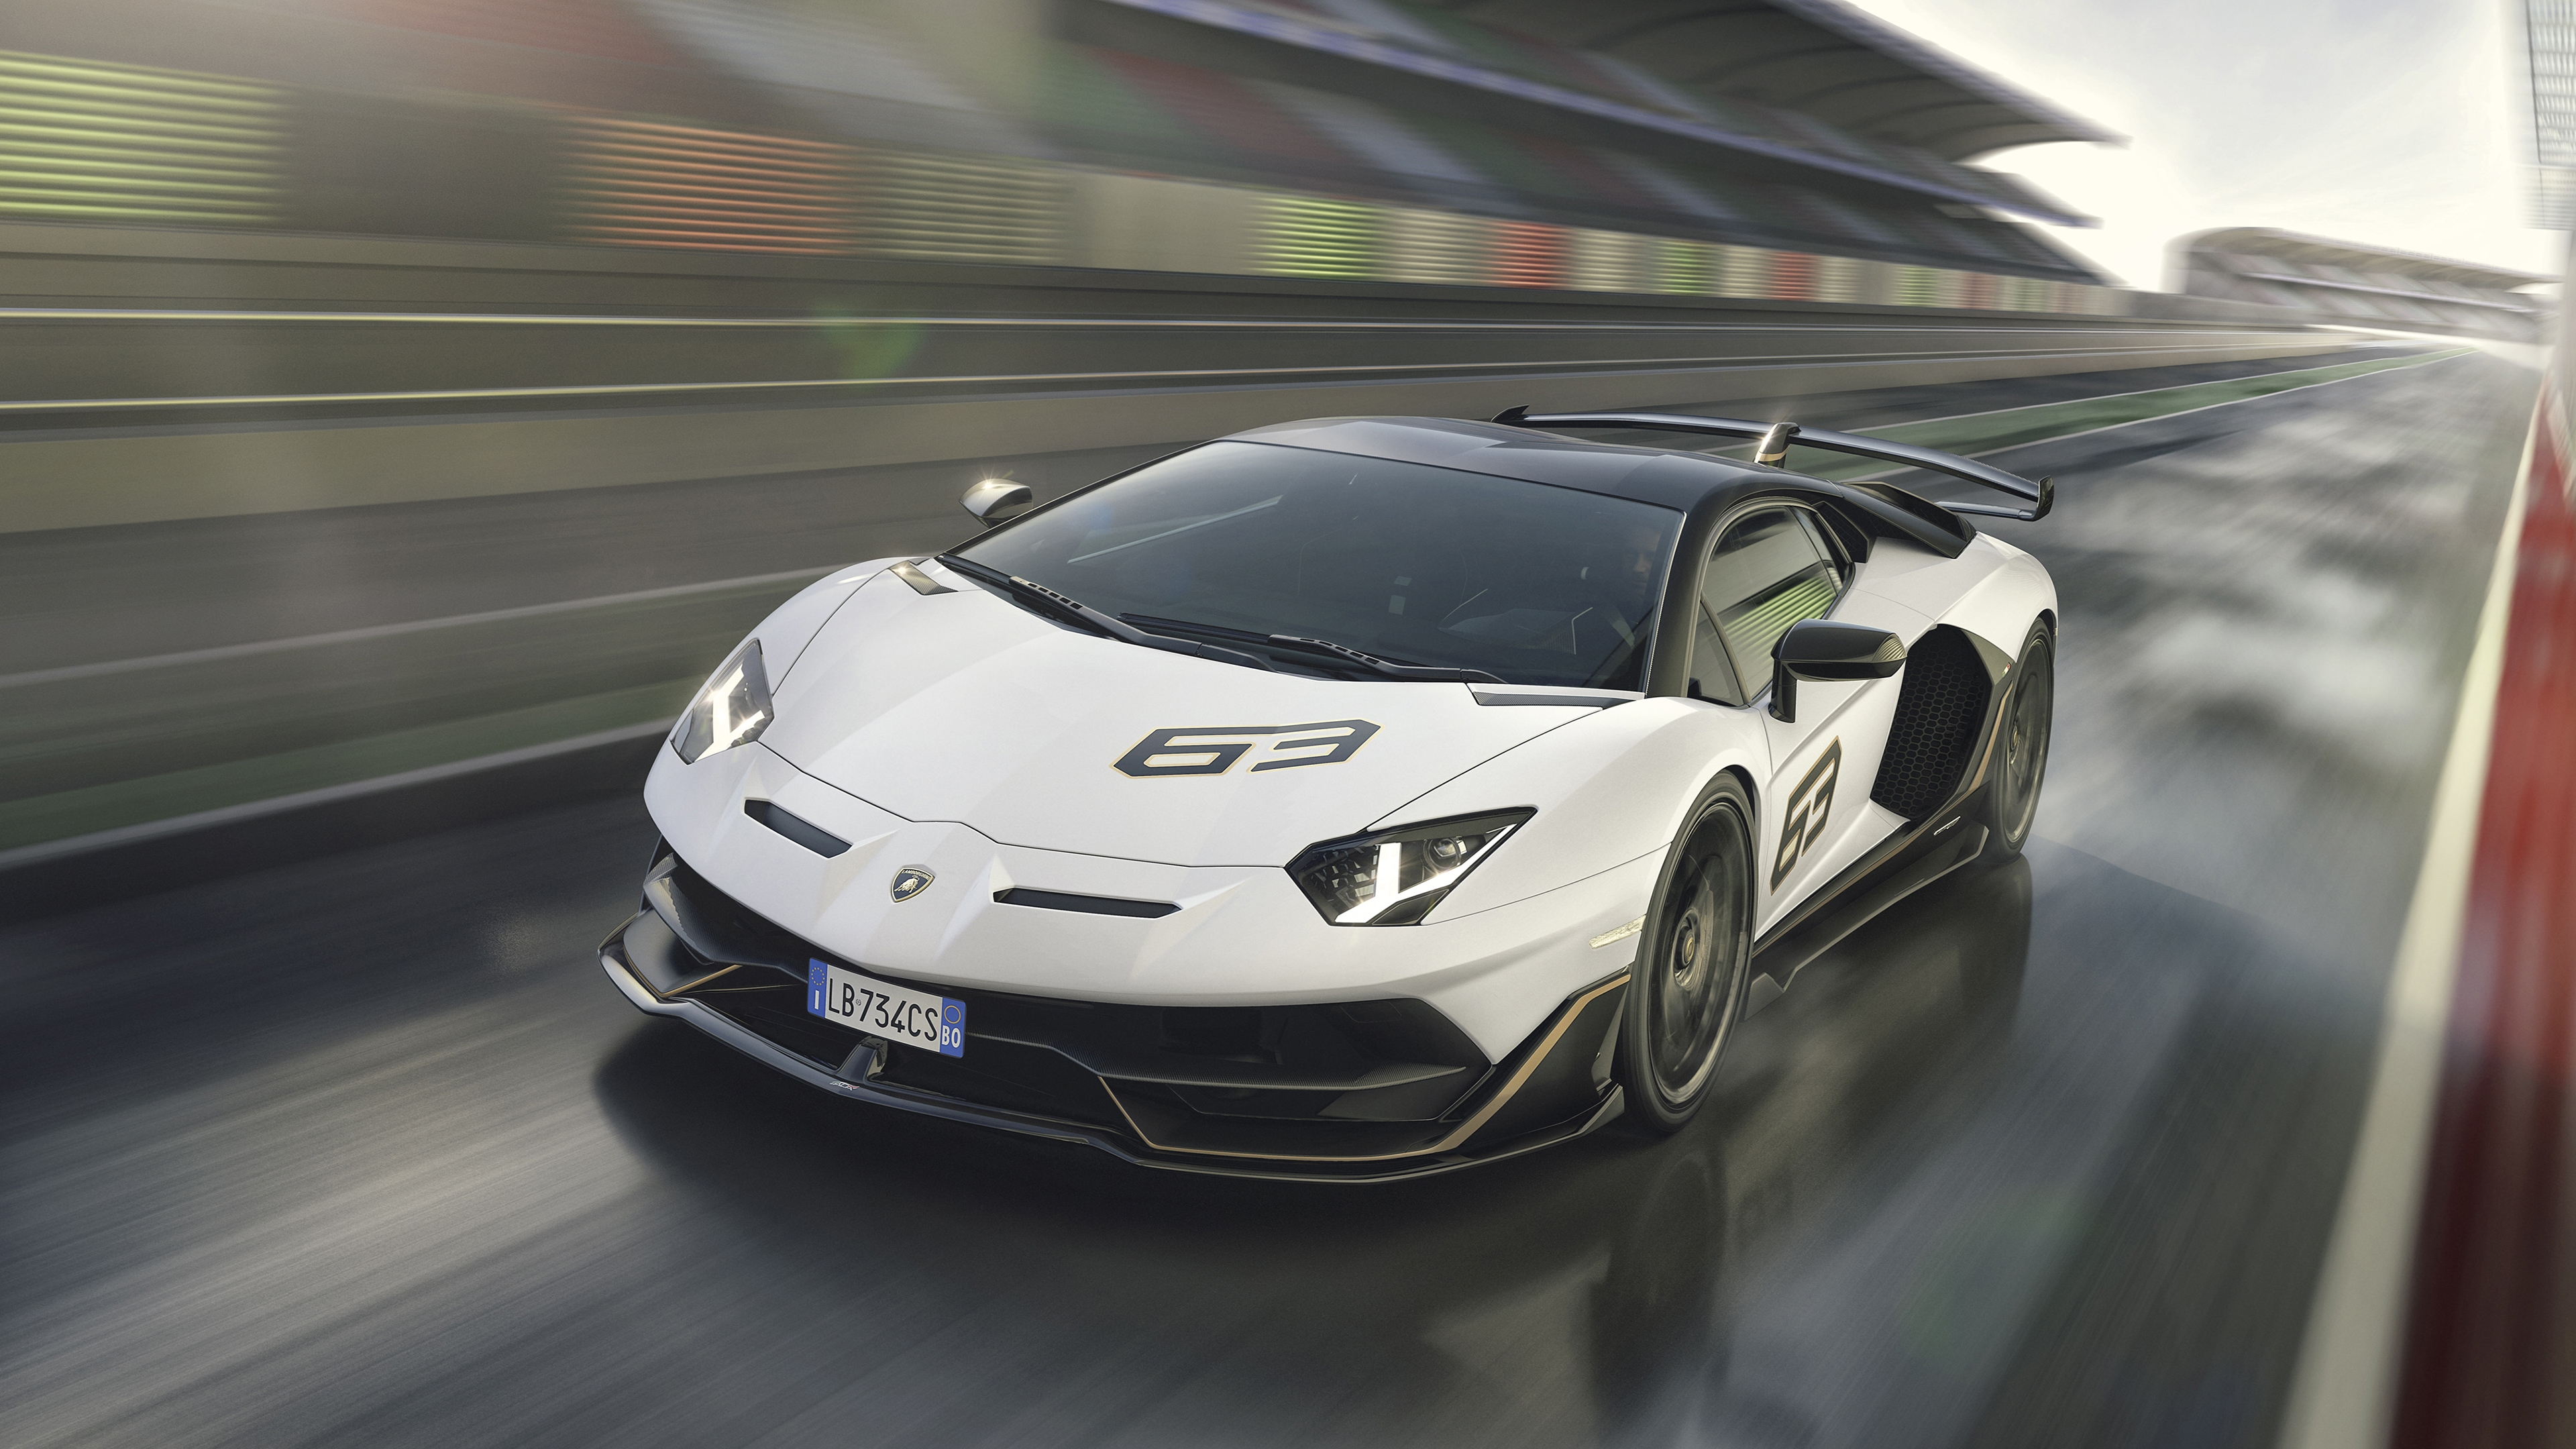 Wallpapers Lamborghini Aventador svj racing in move on the desktop